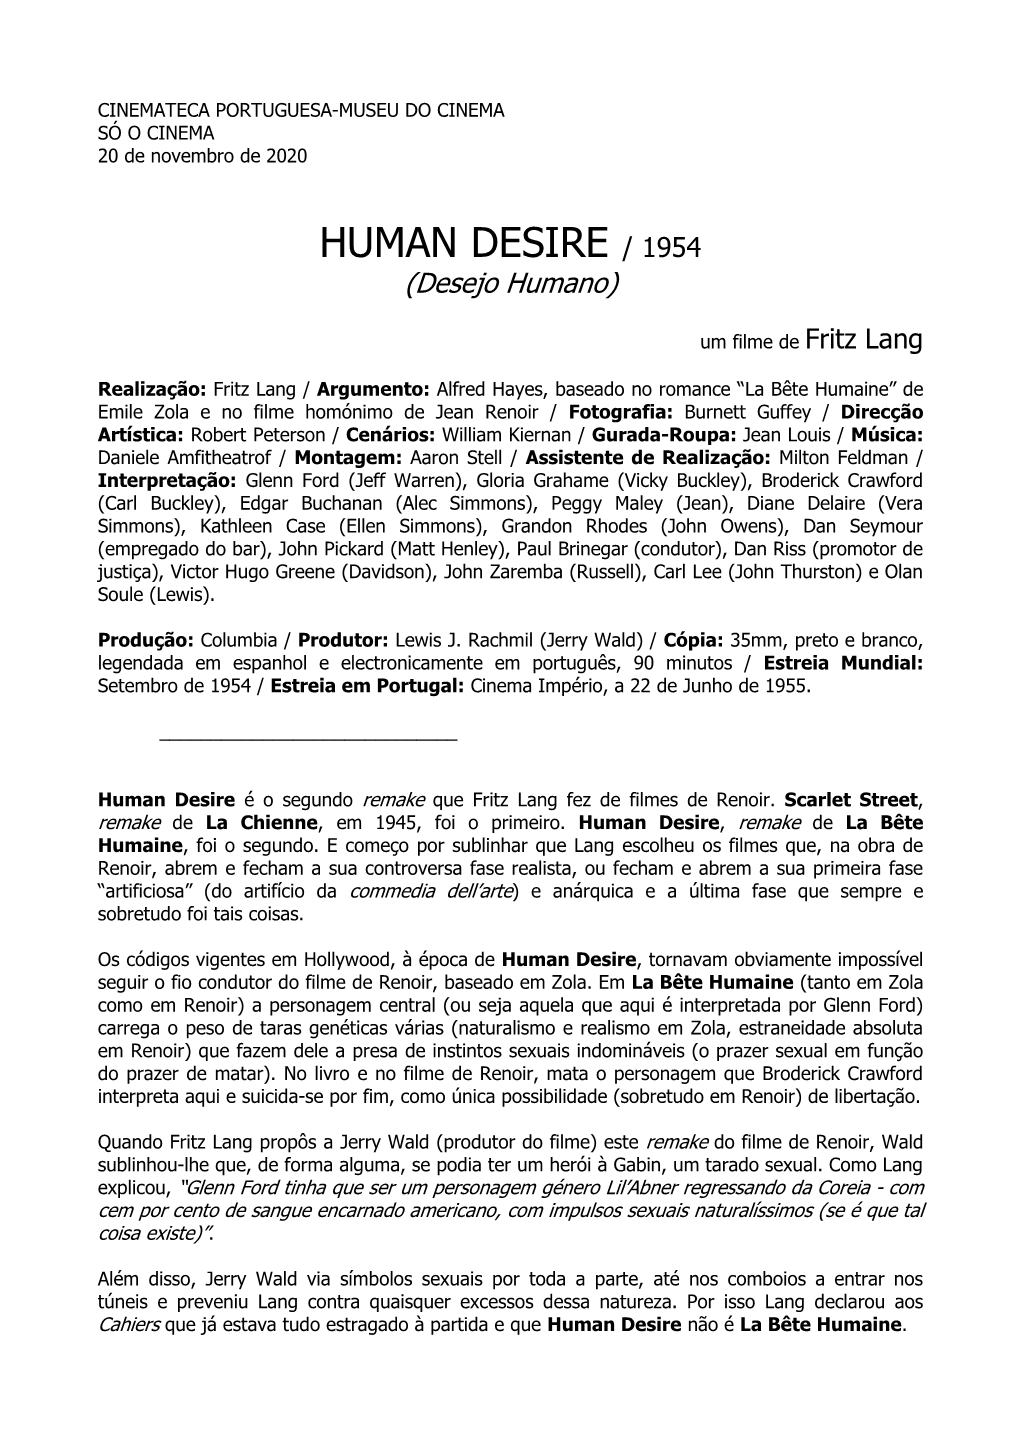 HUMAN DESIRE / 1954 (Desejo Humano)